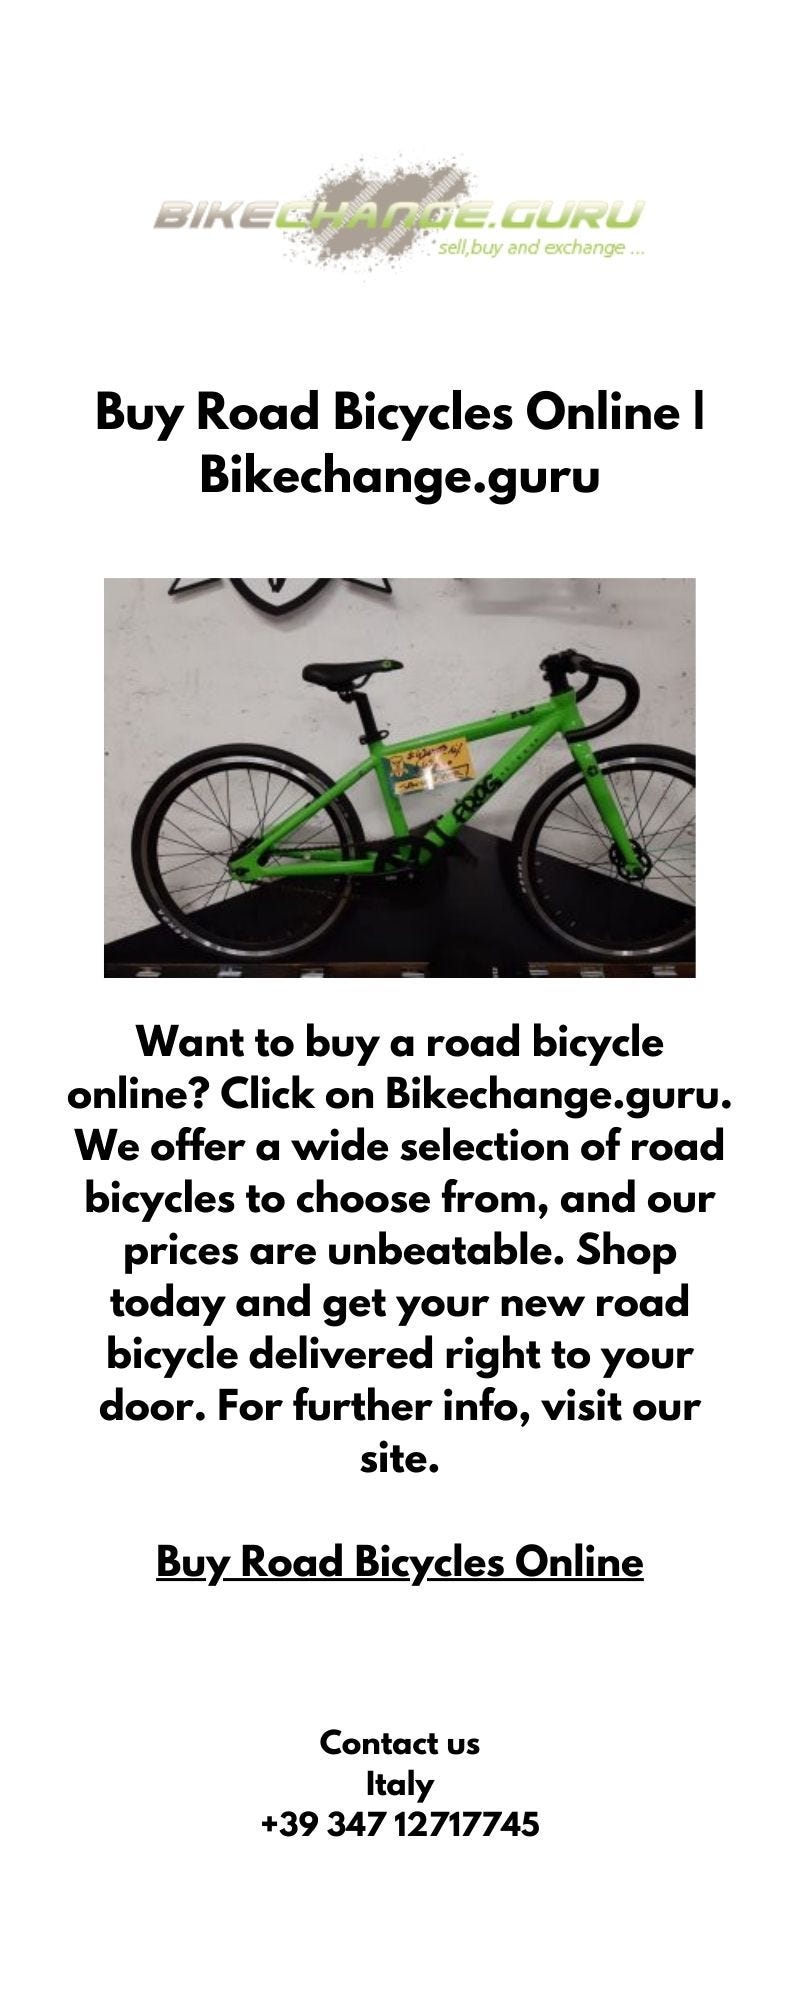 Book Bike Friendly Hotels Online Bikechange.guru - Bikechangeguru